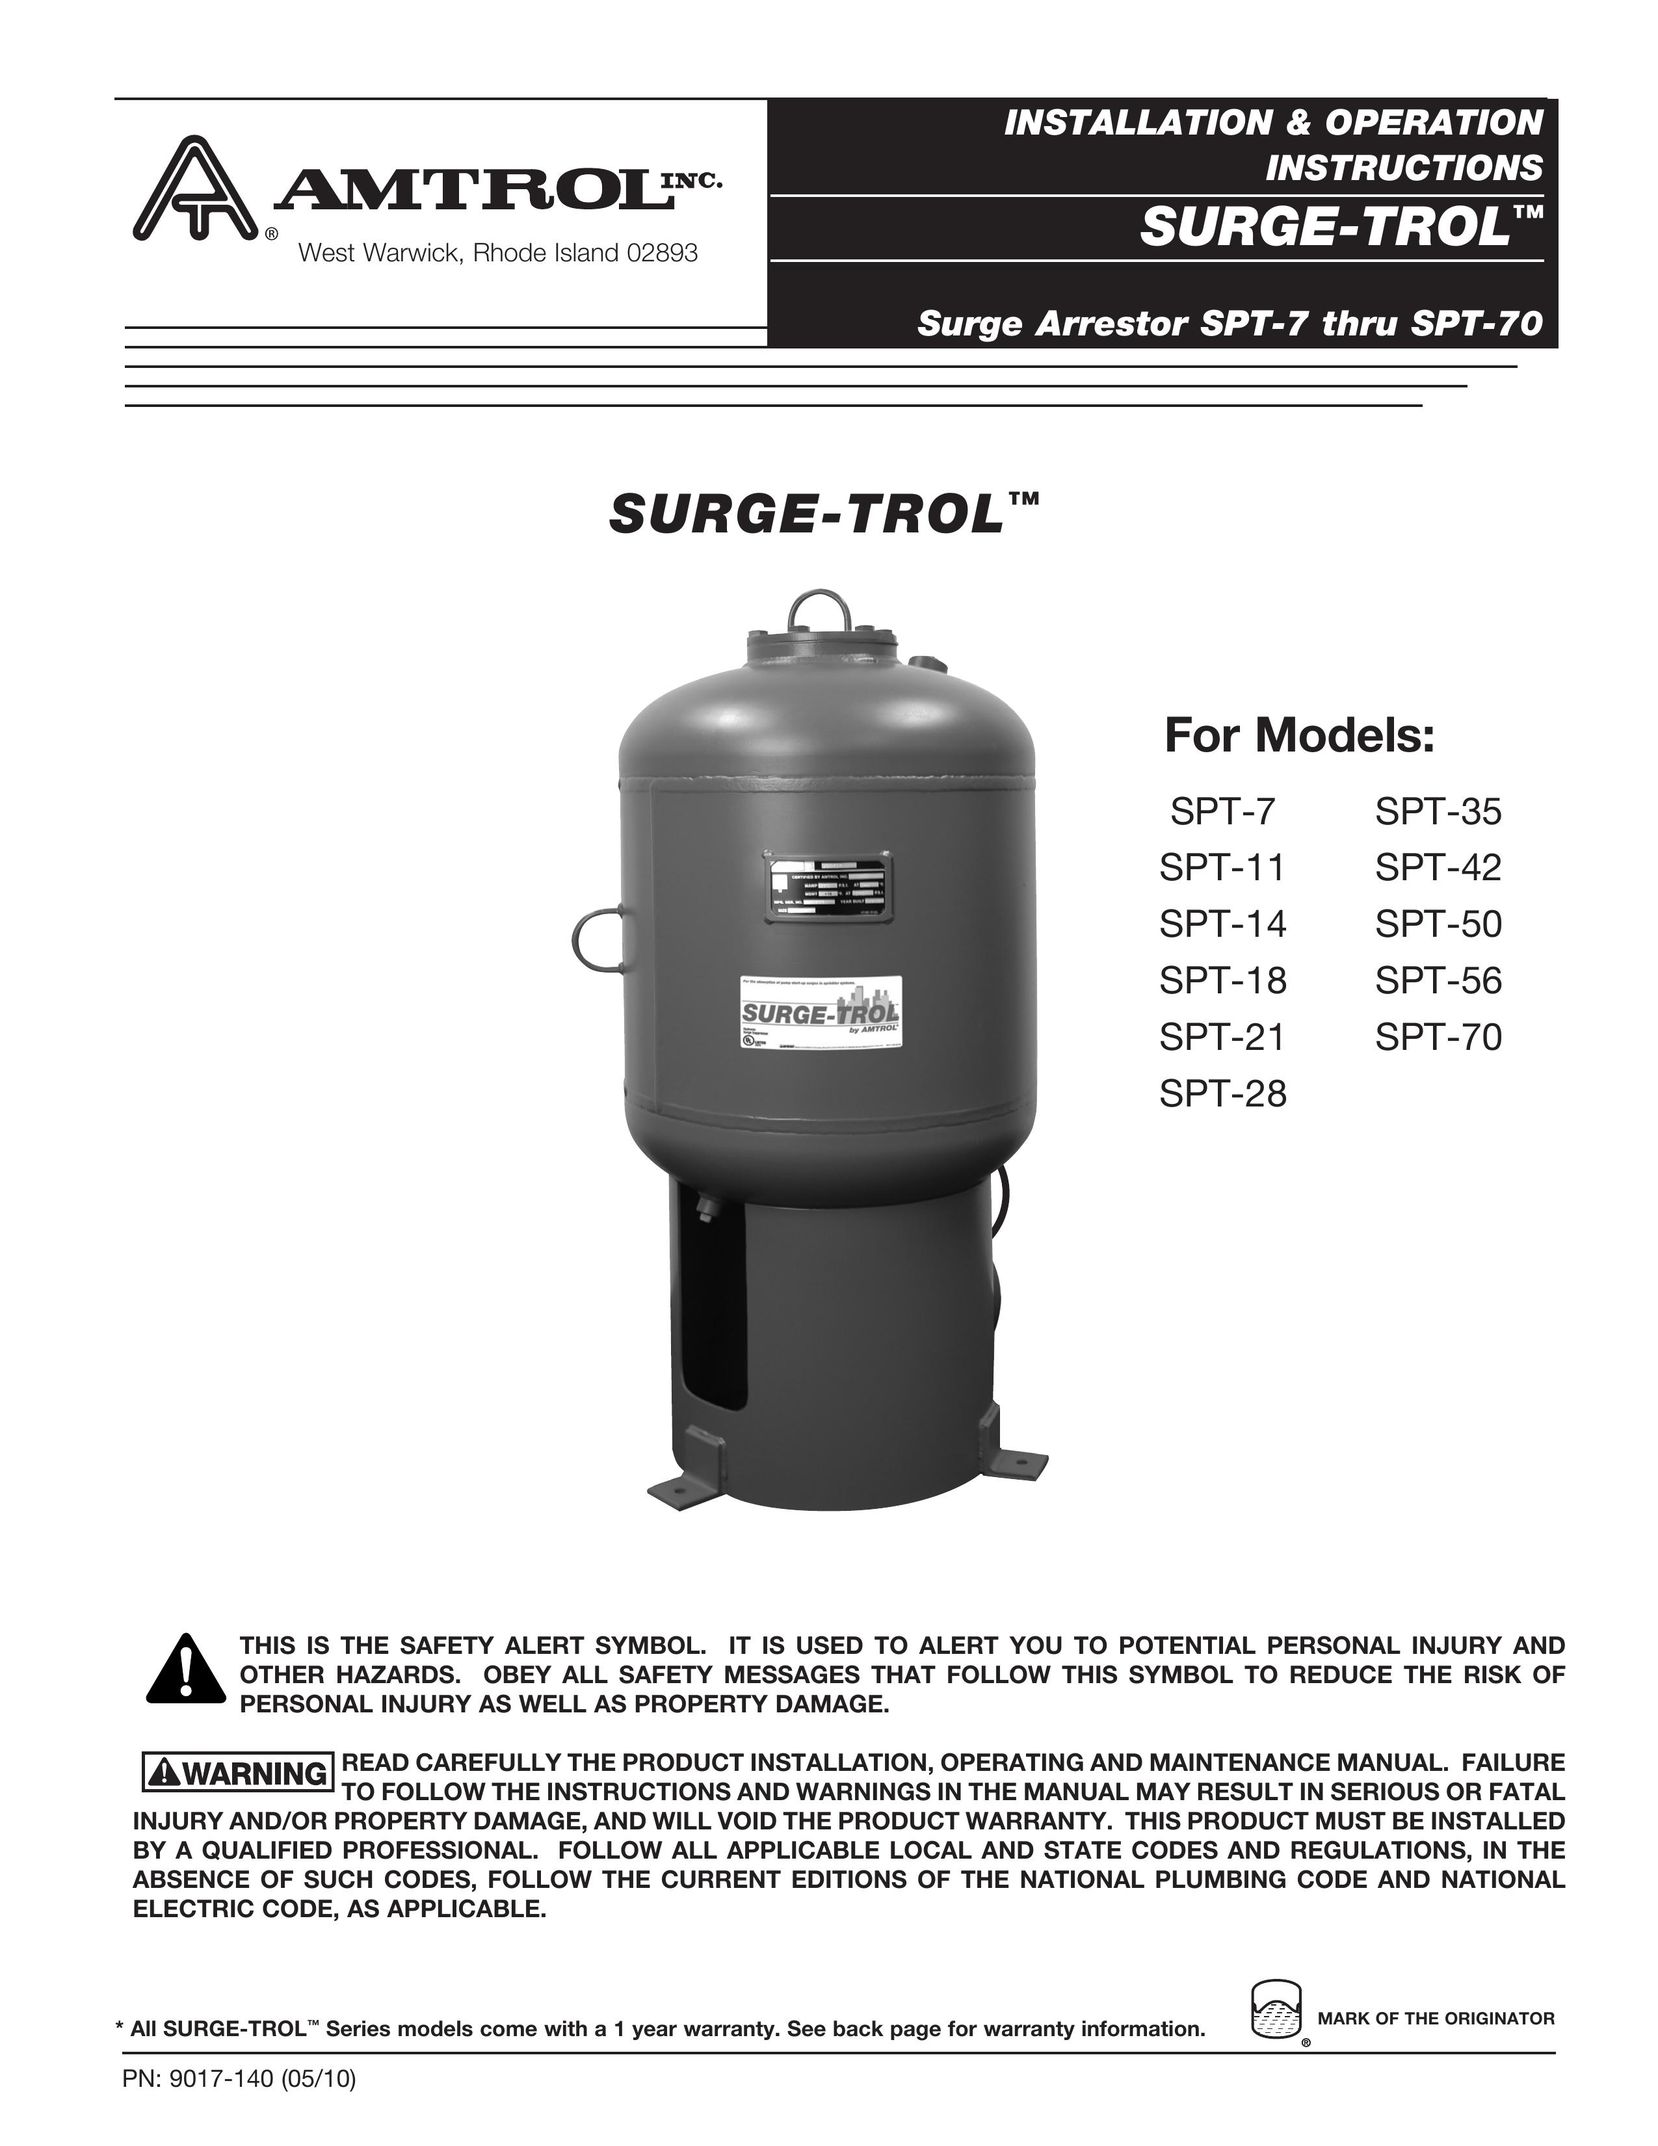 Amtrol SPT-50 Surge Protector User Manual